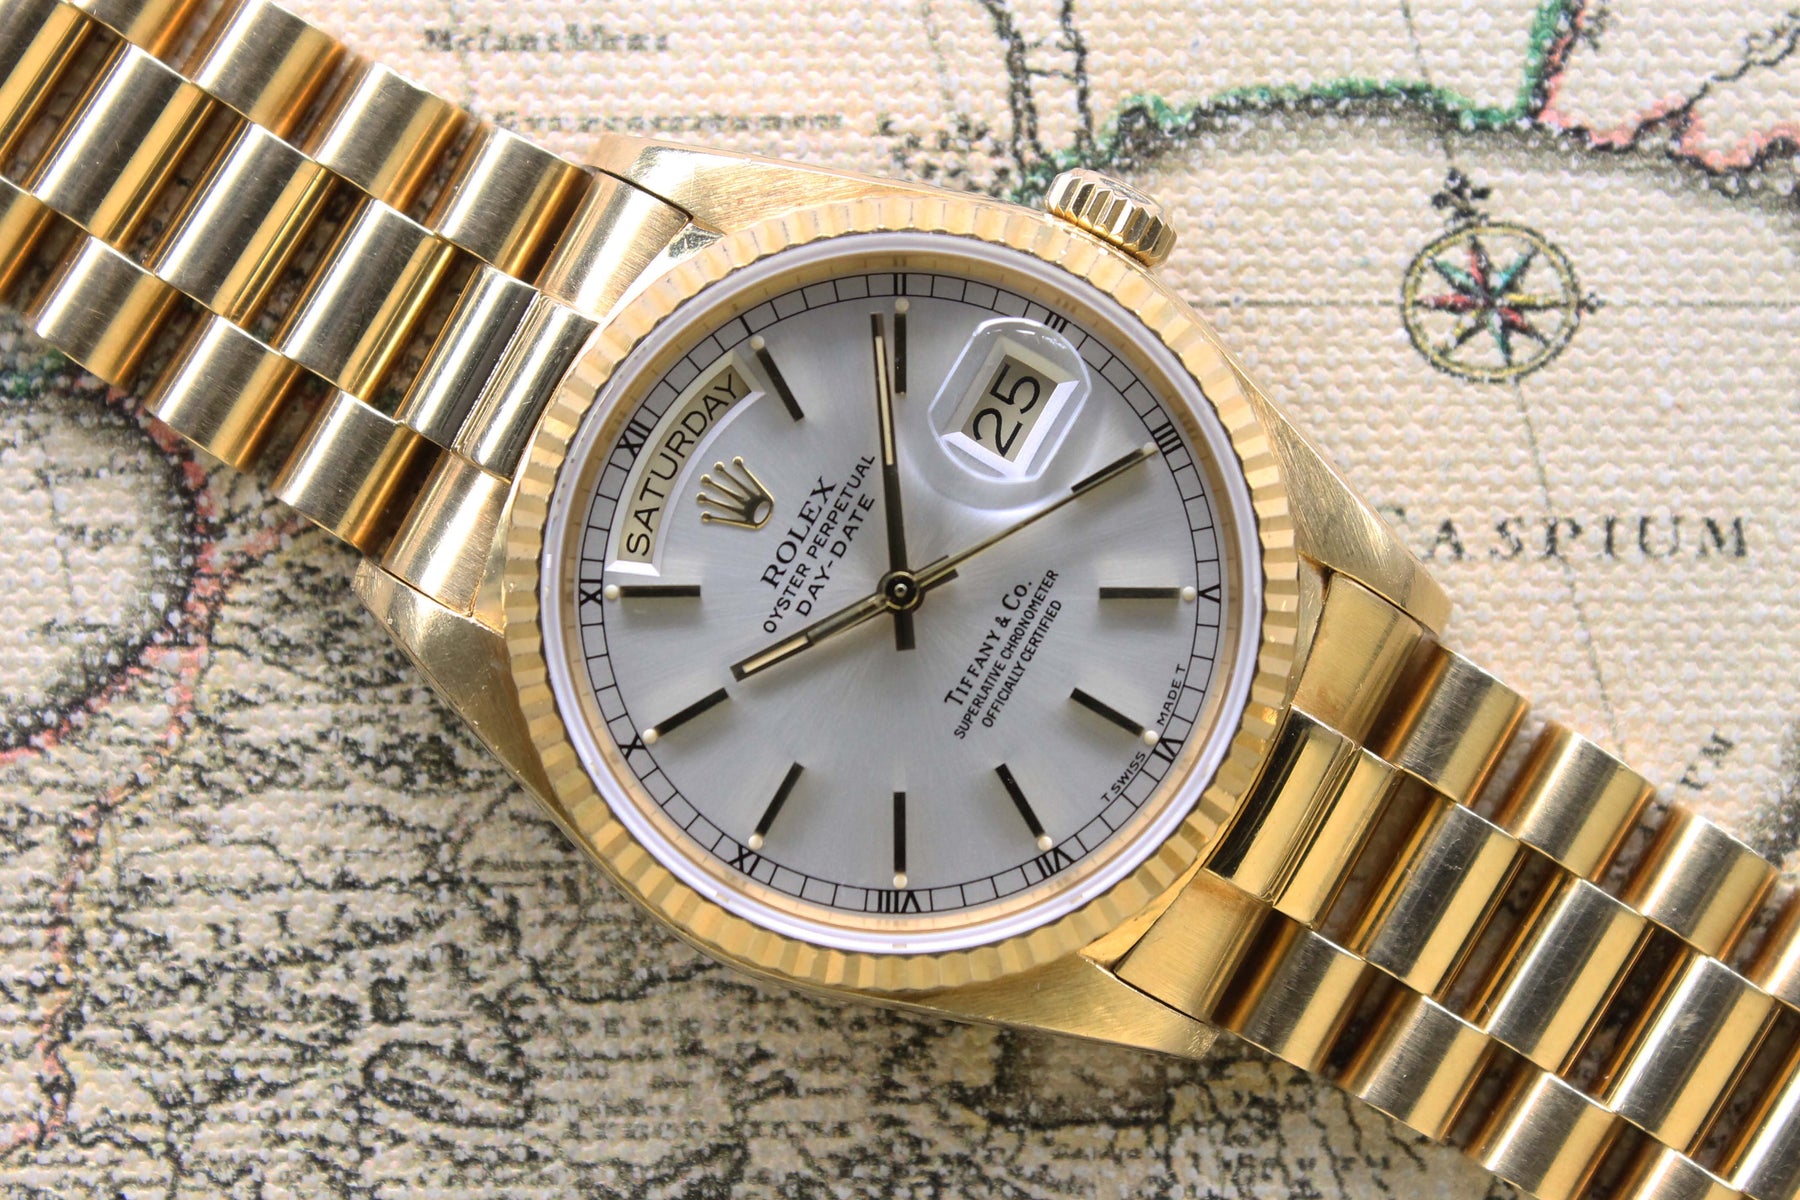 1986 Rolex Day Date Silver Dial 'Tiffany & Co' Ref. 18038